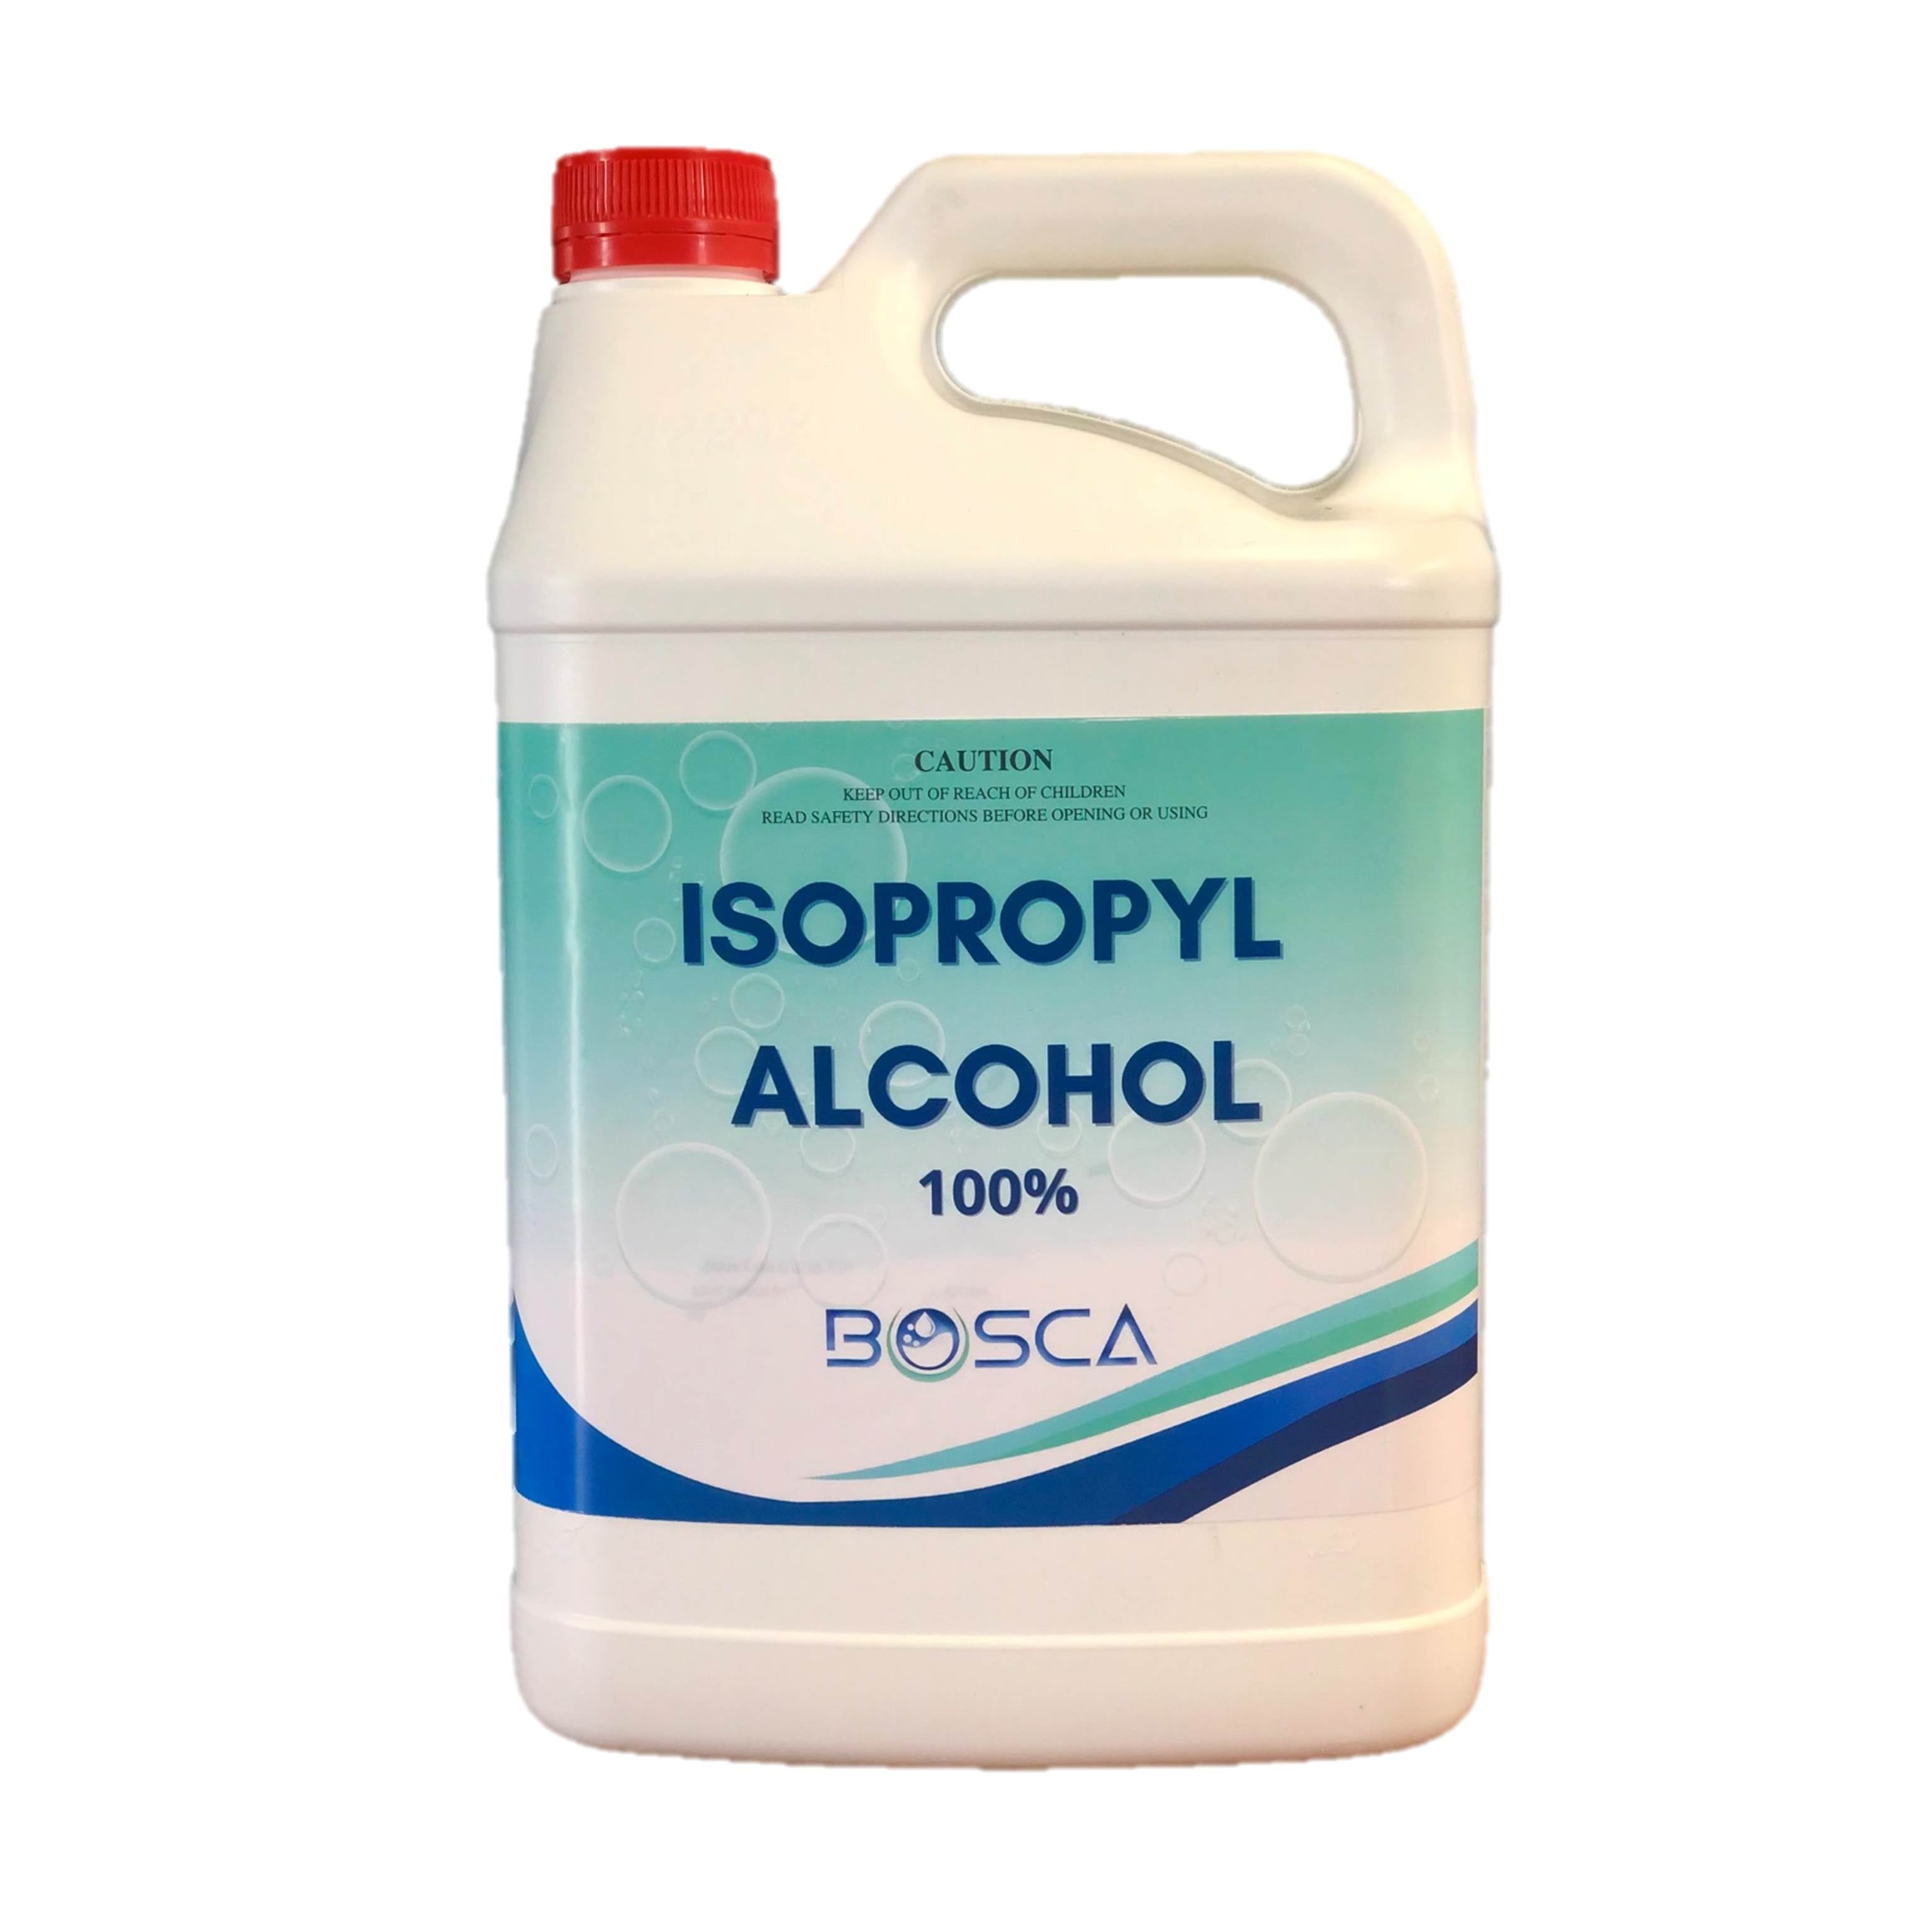 ISOPROPYL ALCOHOL 99%, isopropyl alcohol